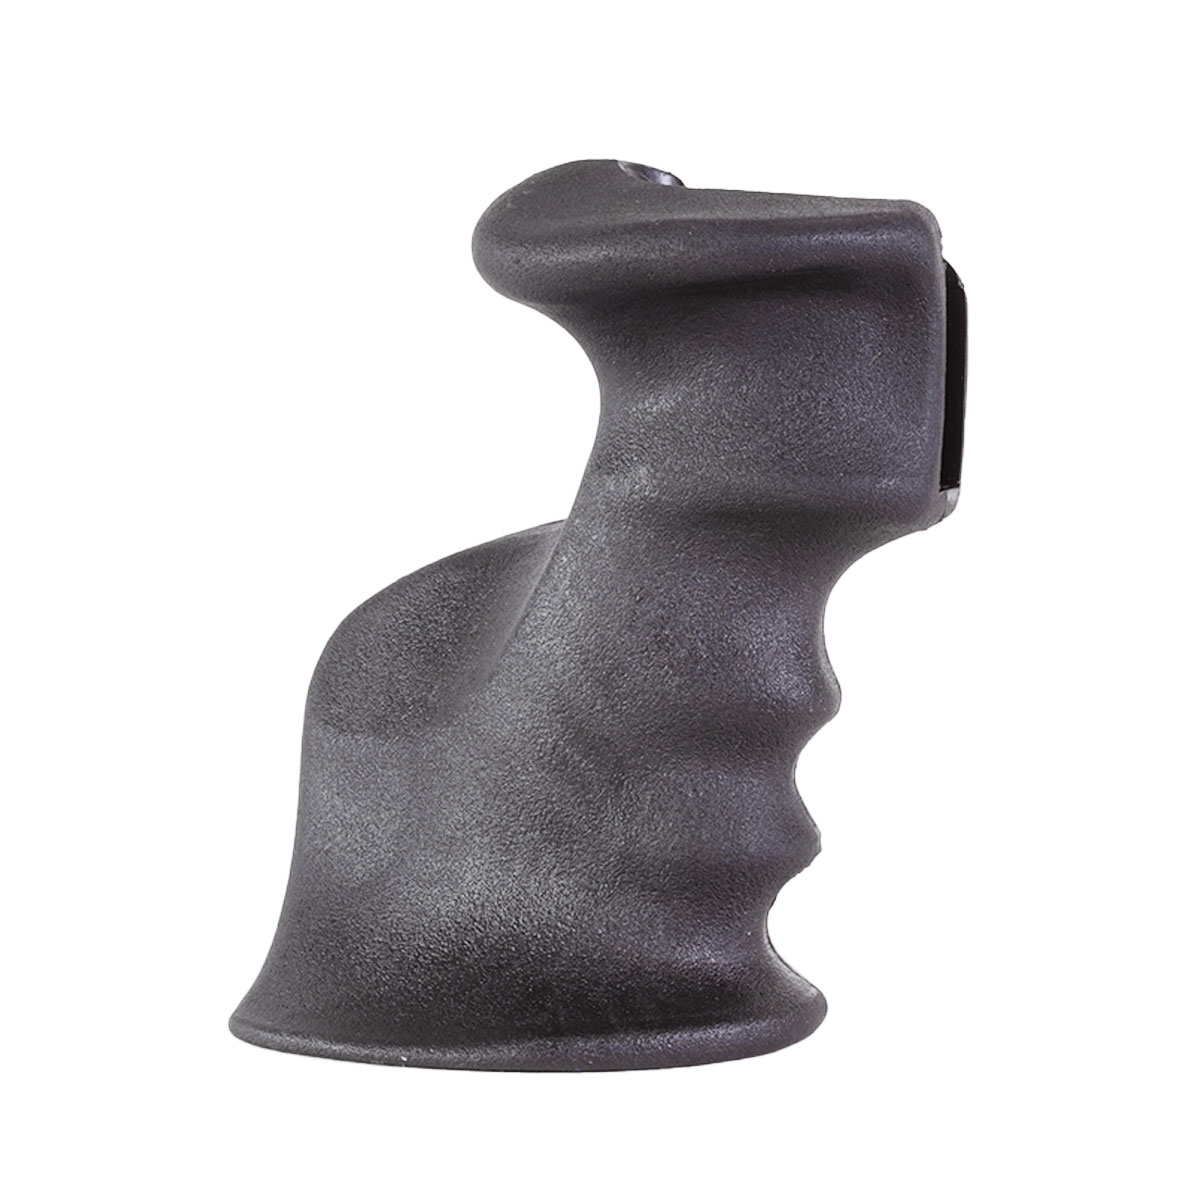 US Made Black Plastic Heavy Duty Finger Groove Ergonomic Handle Grip